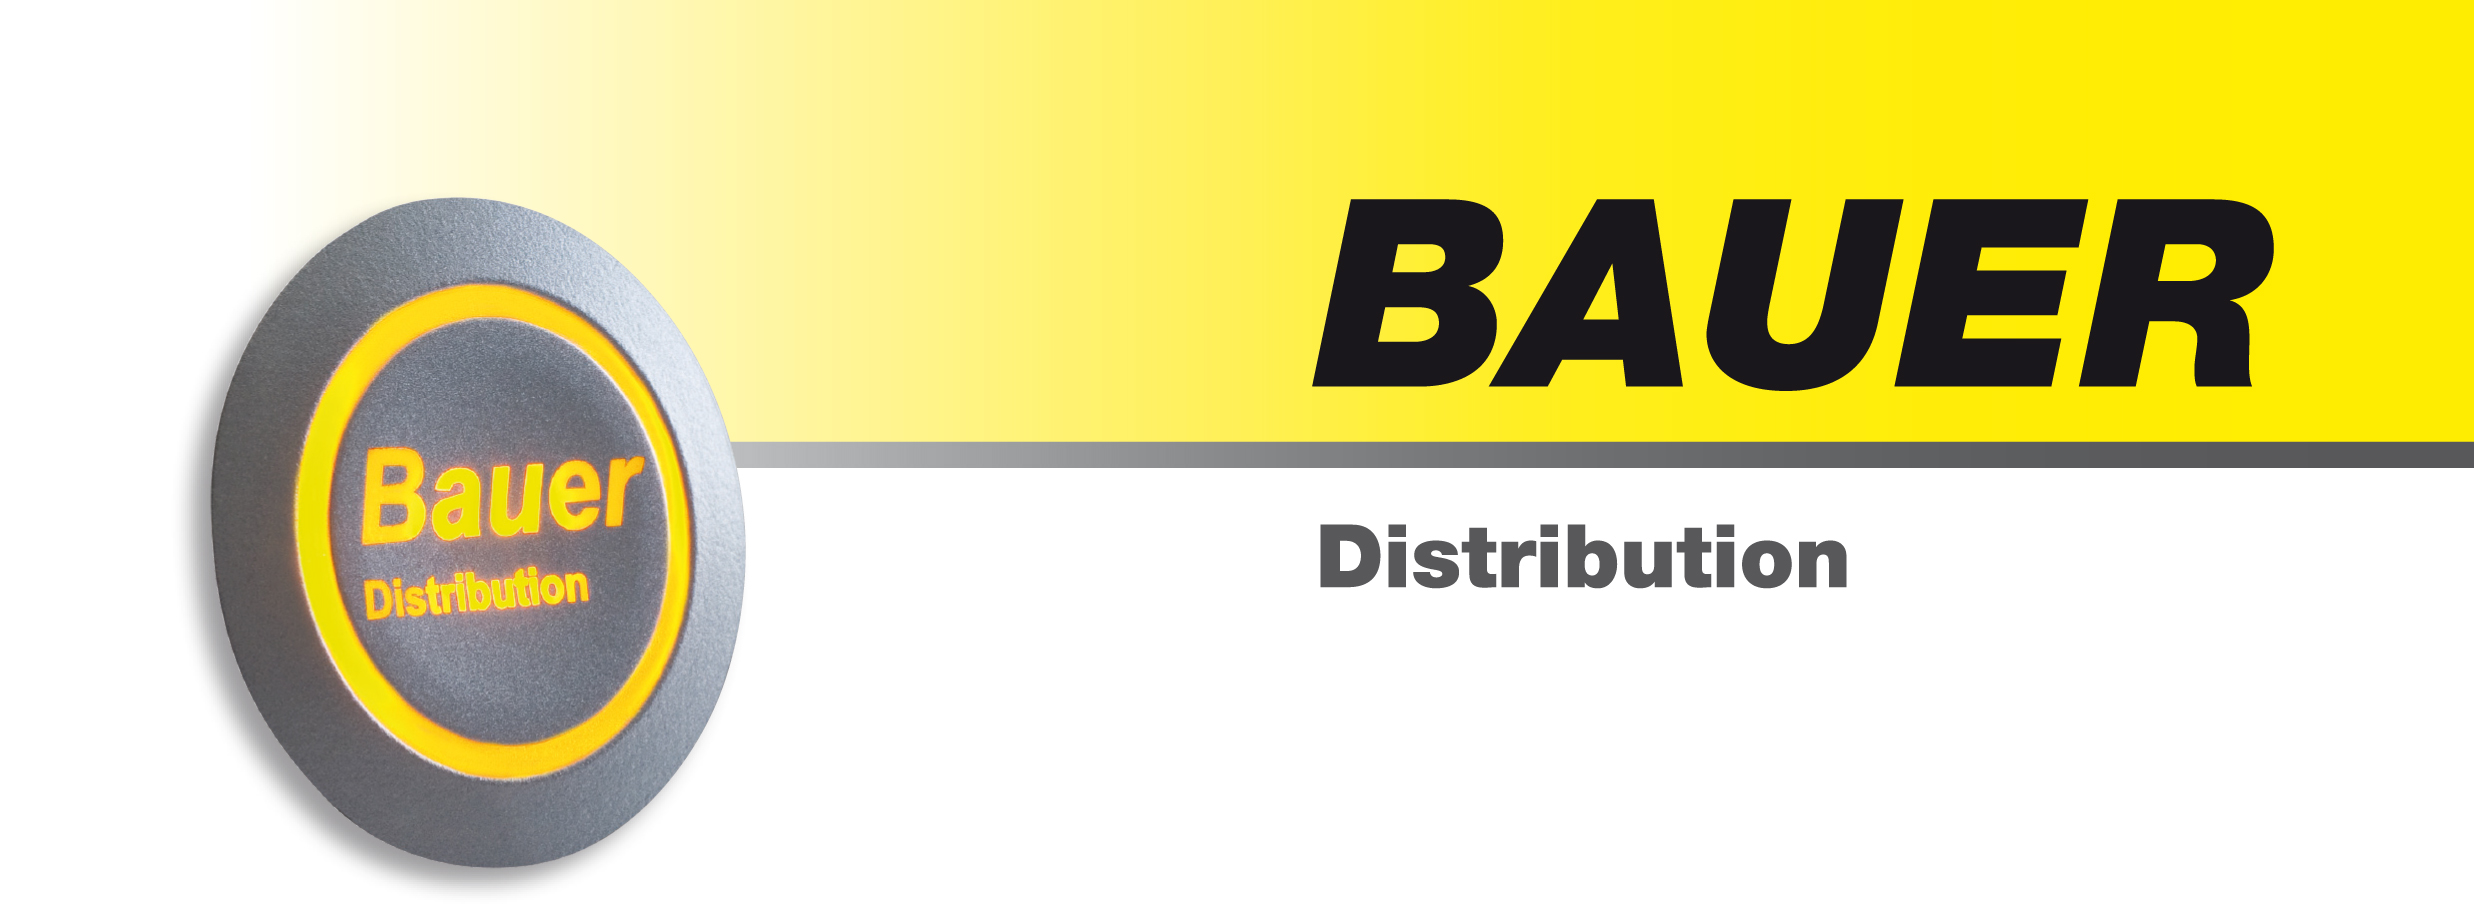 Bauer Distribution